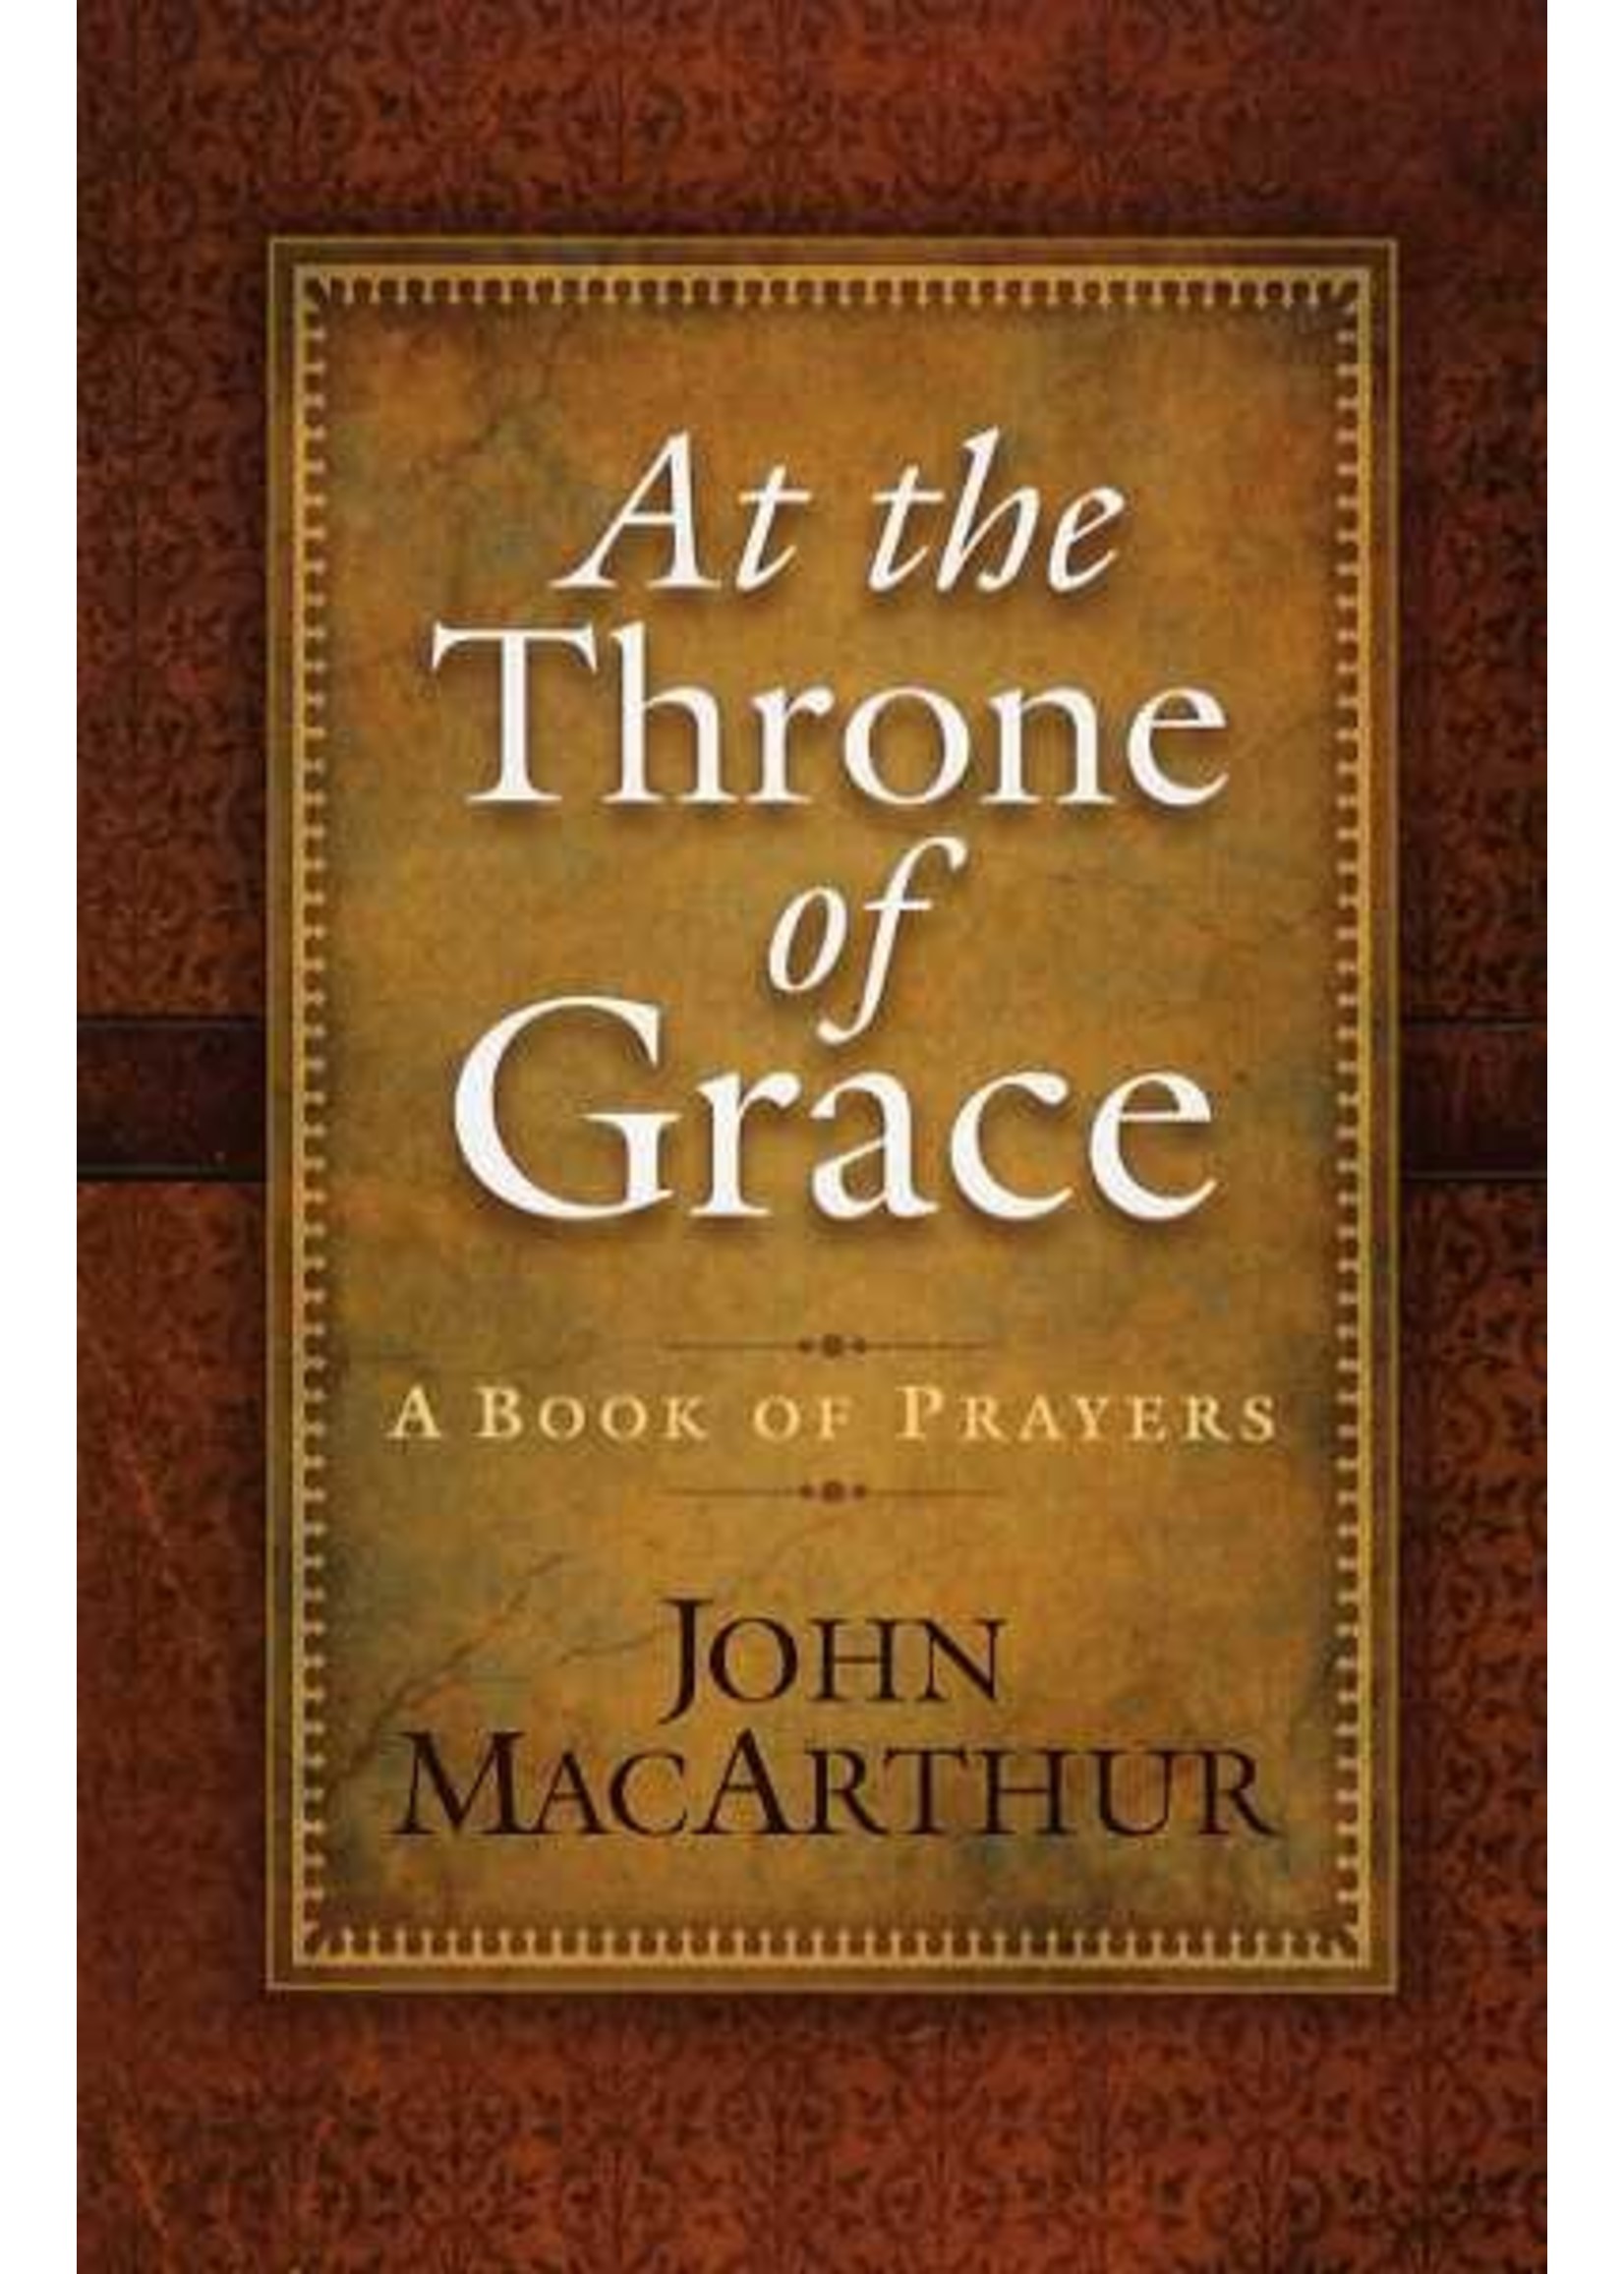 Harvest House At the Throne of Grace - John MacArthur